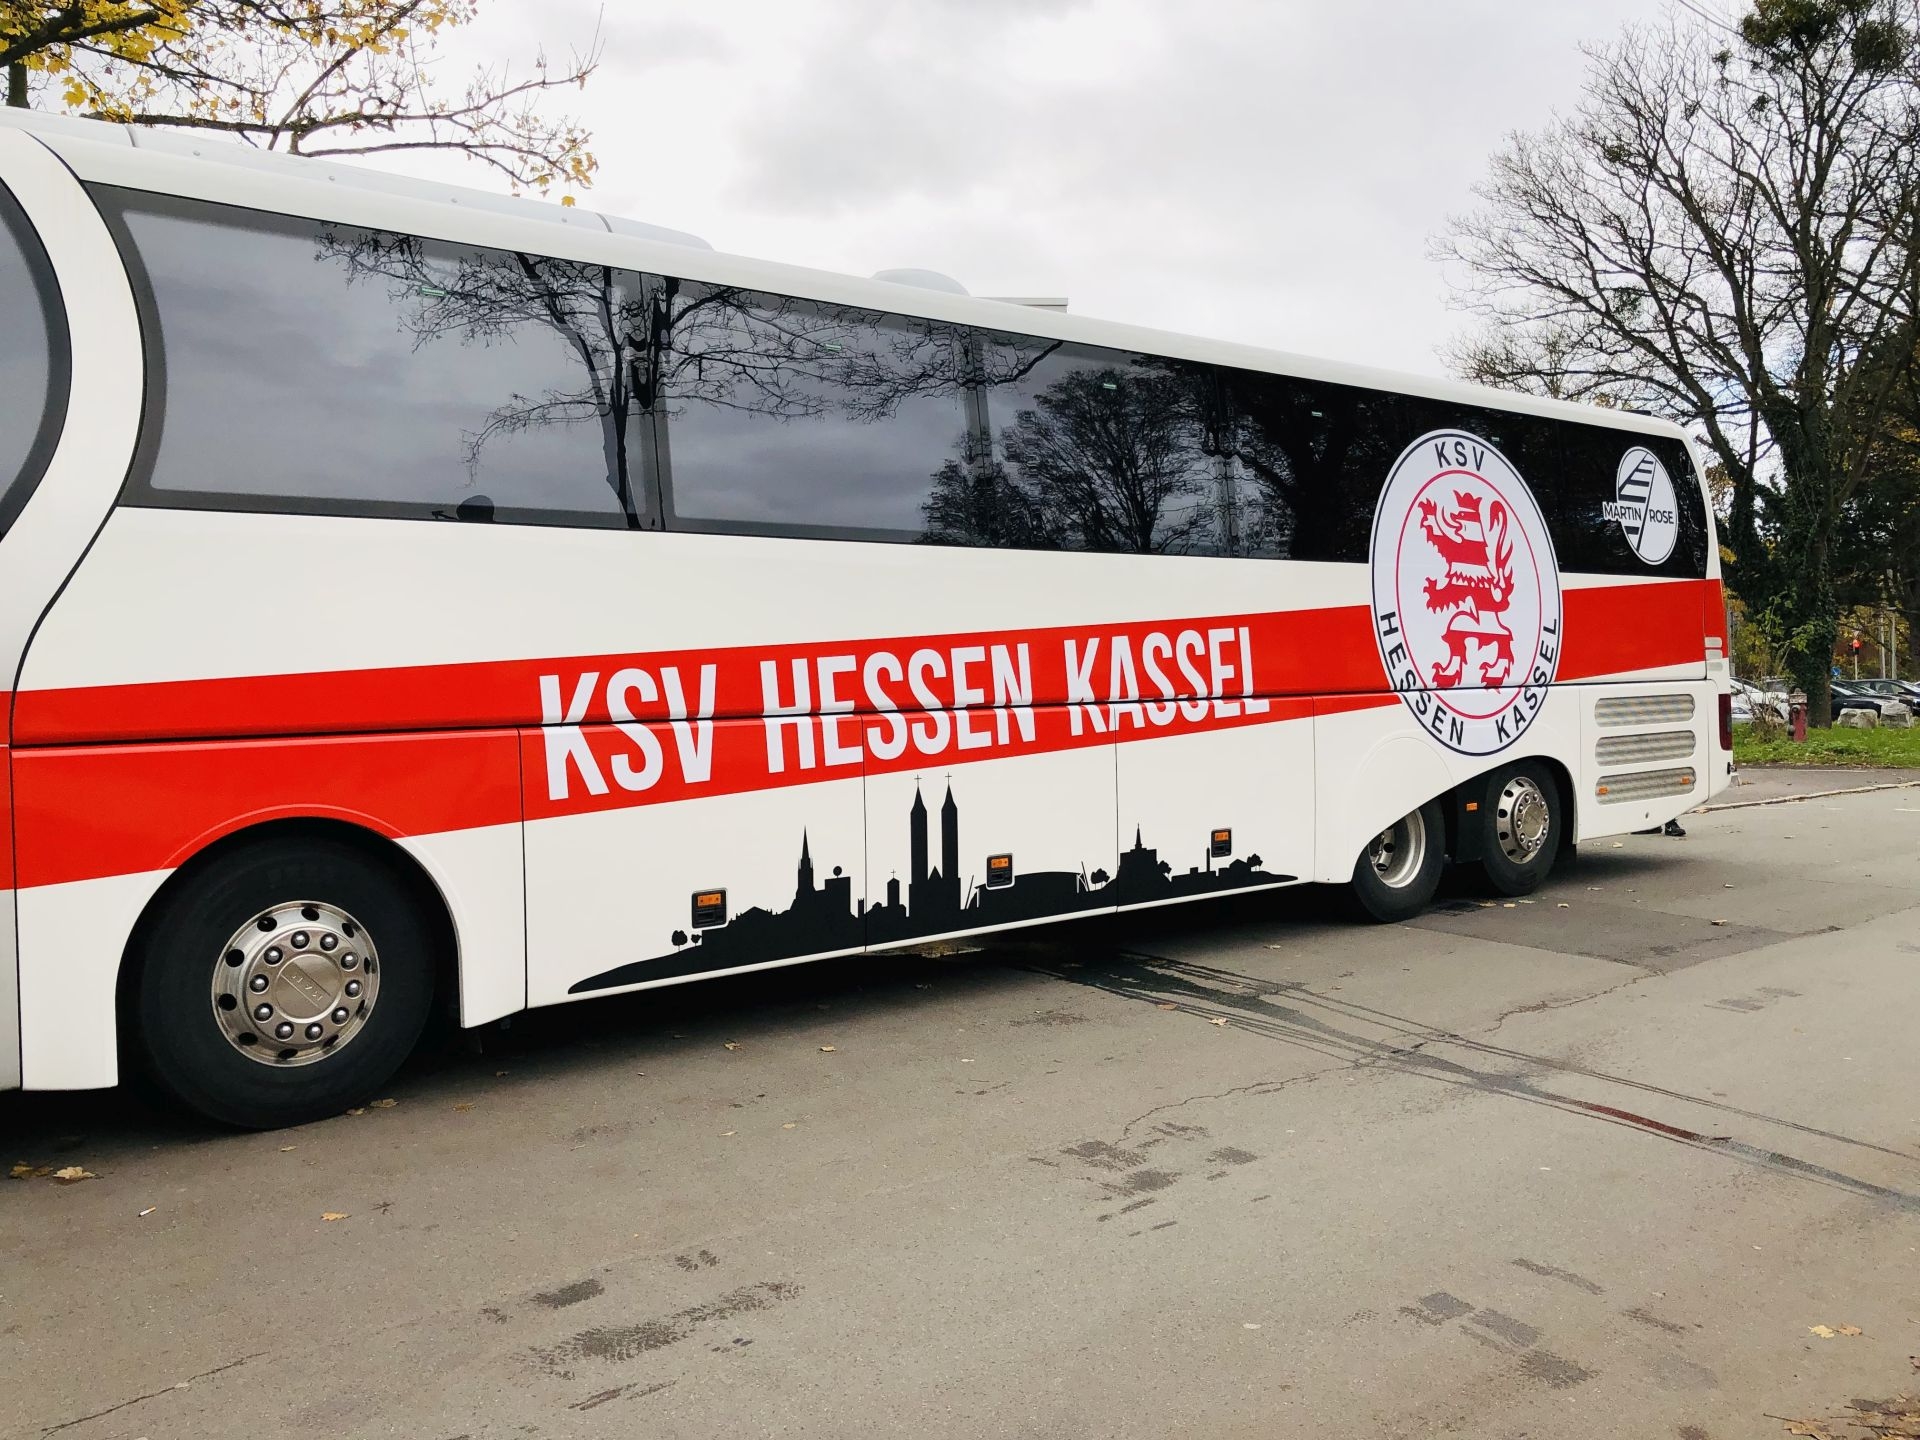 KSV-Bus